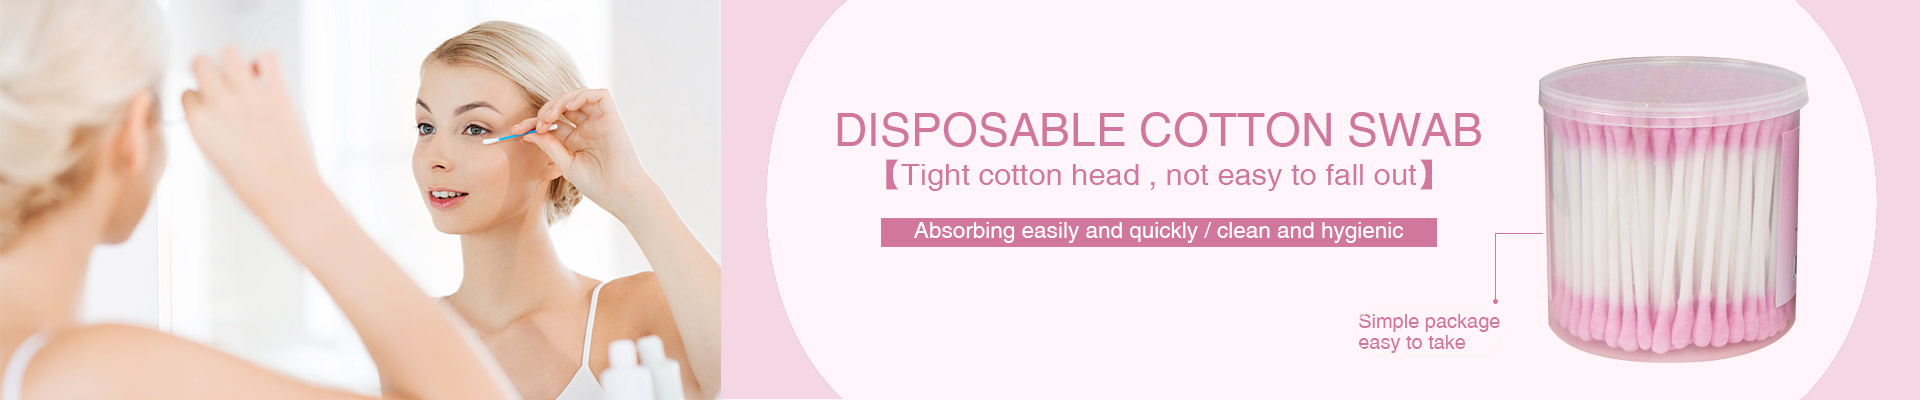 Disposable Cotton Swabs